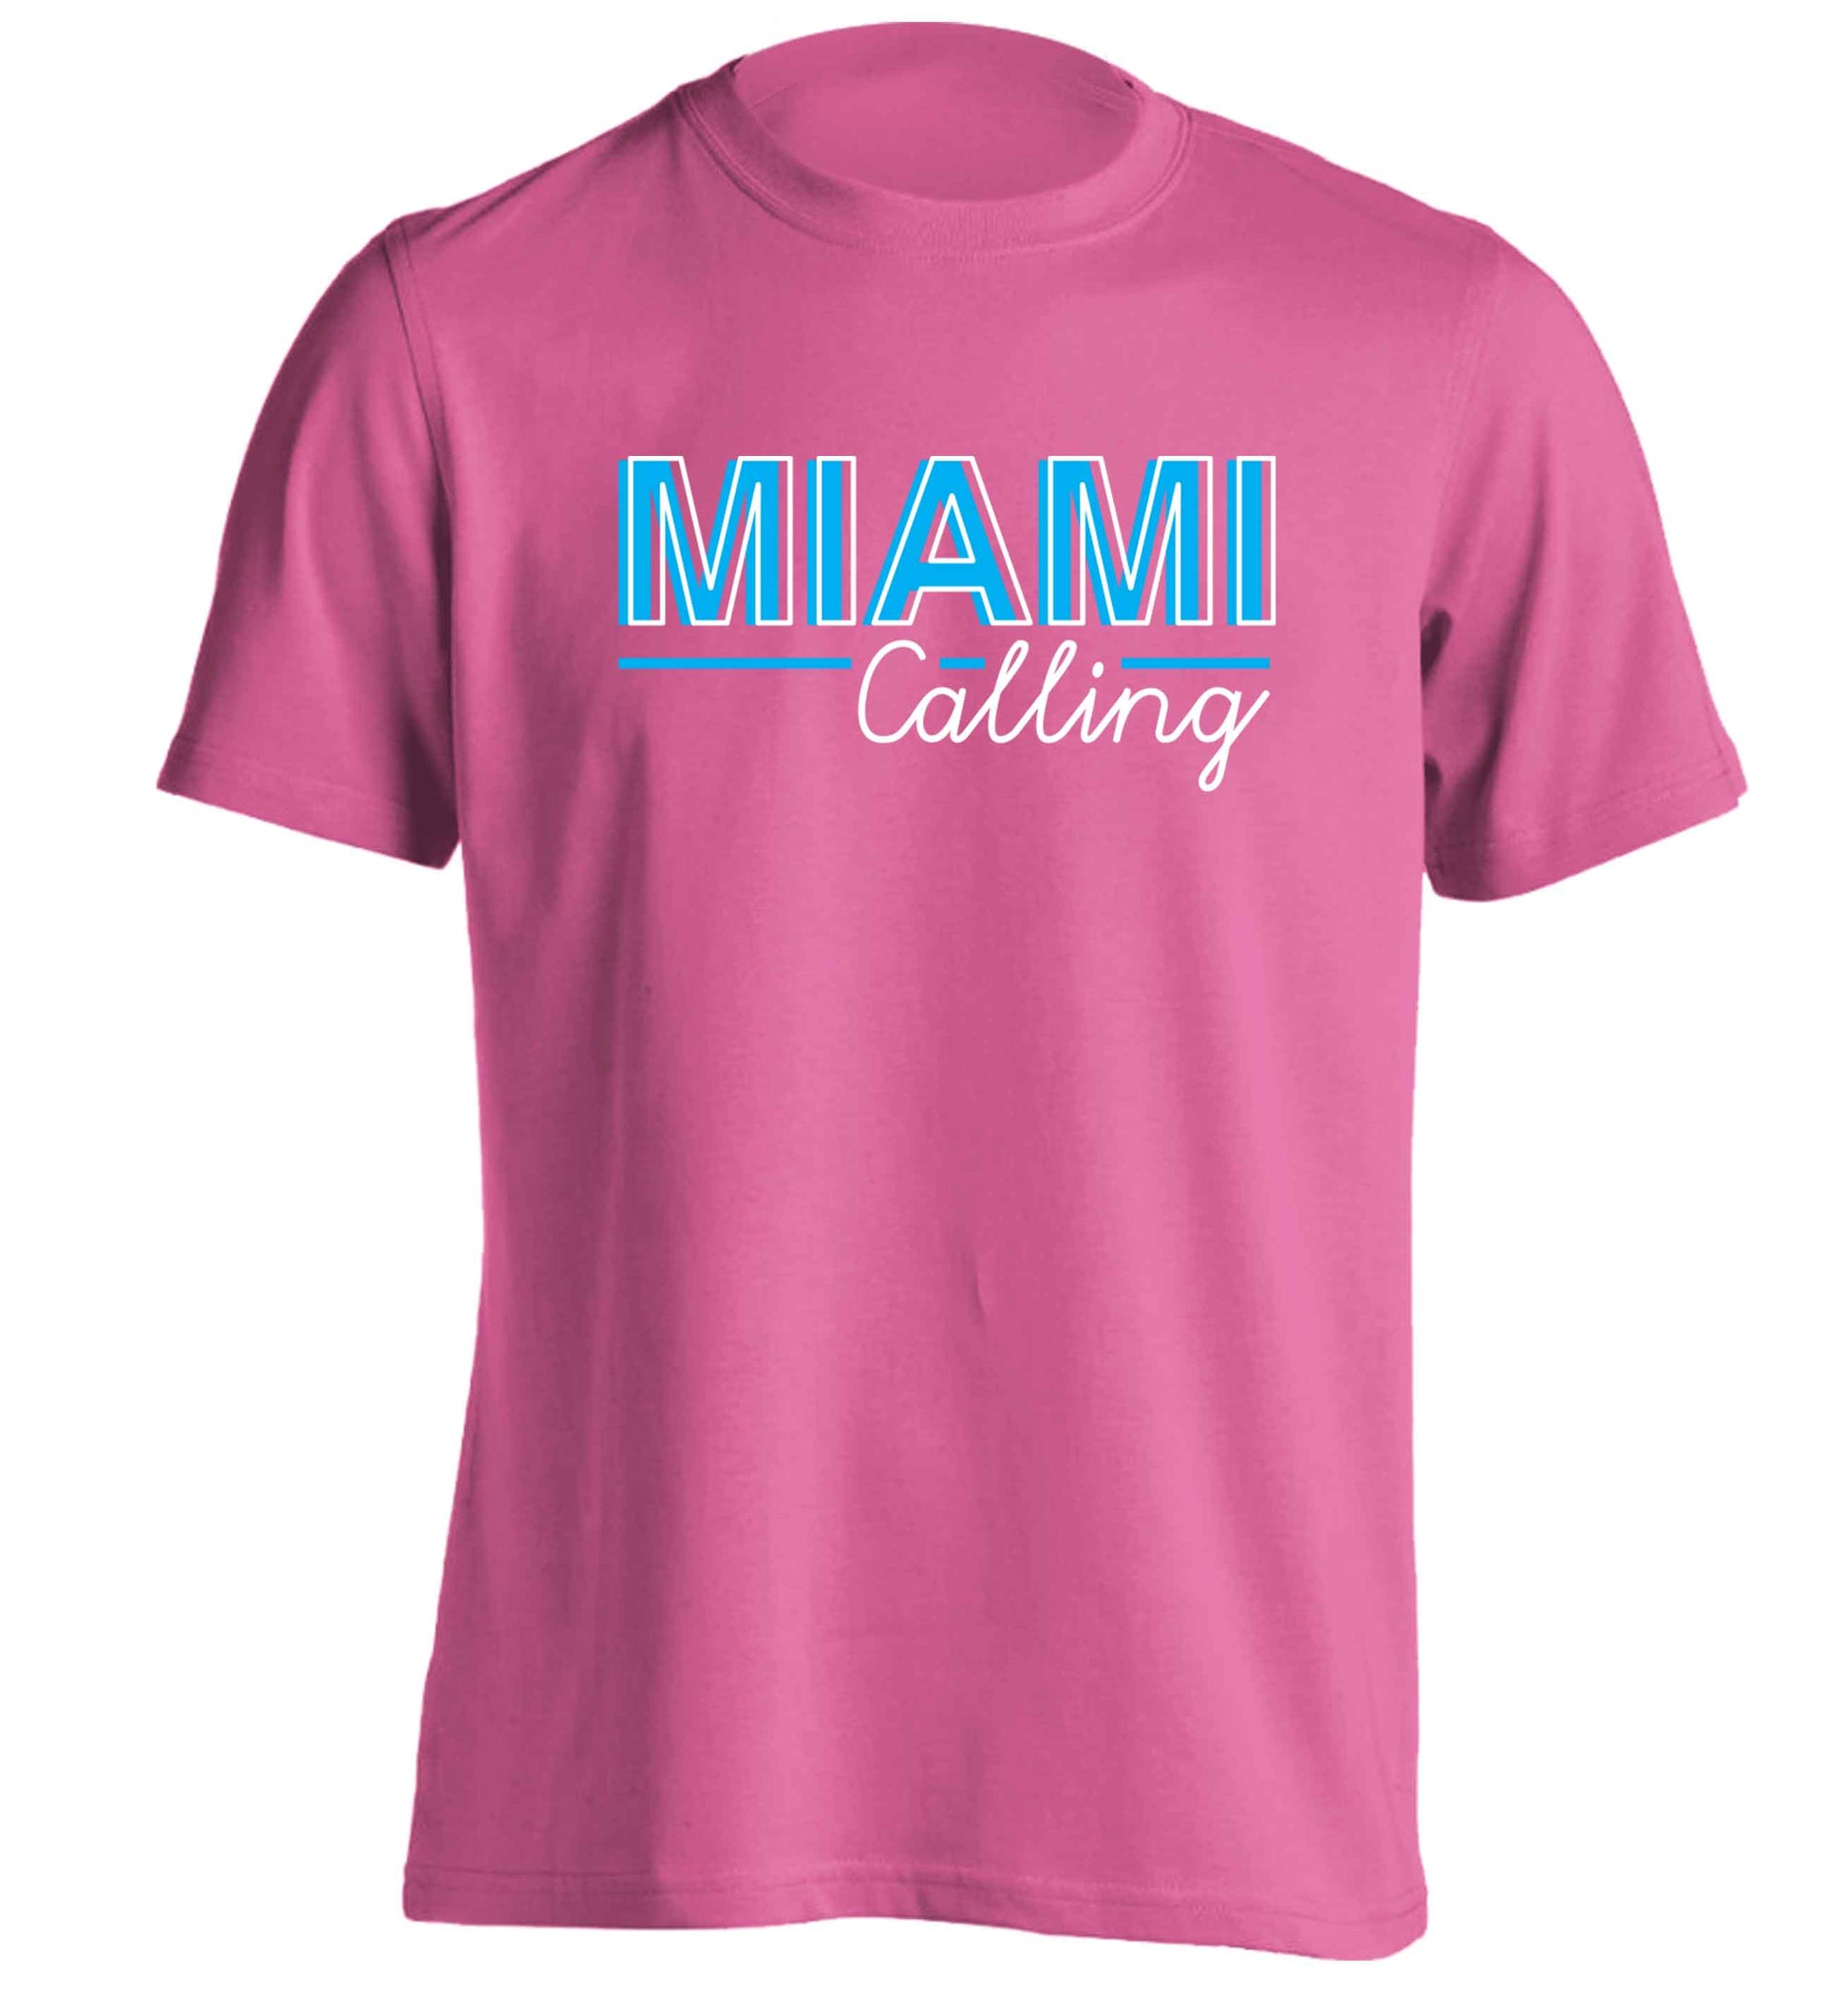 Miami calling adults unisex pink Tshirt 2XL